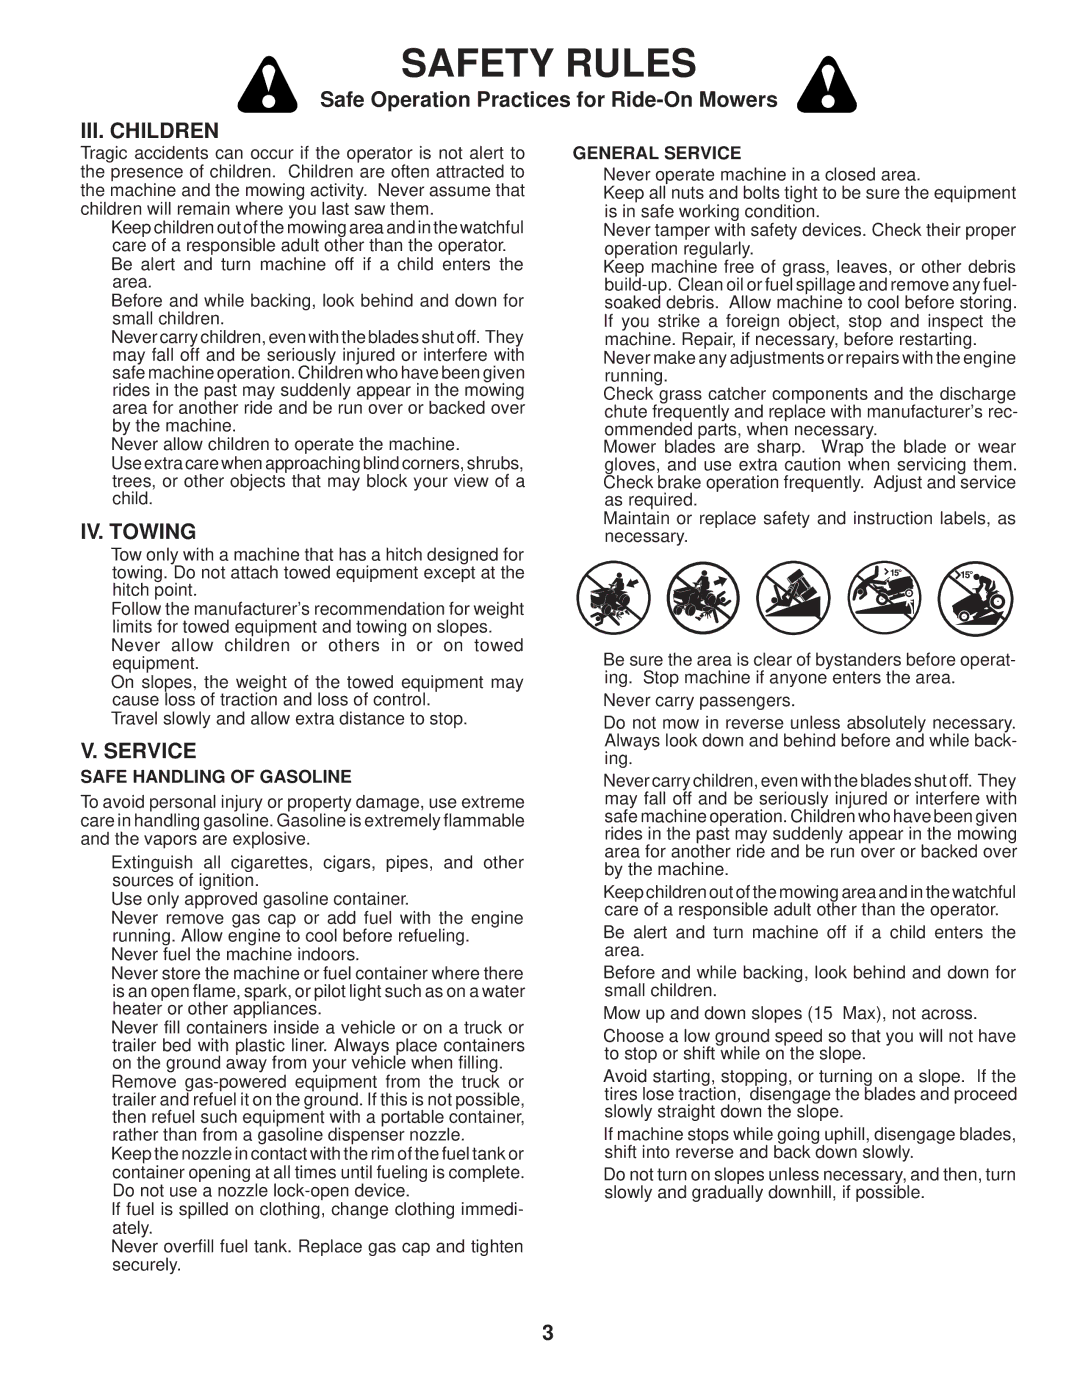 Husqvarna LGTH2454 owner manual III. Children, IV. Towing, Service 